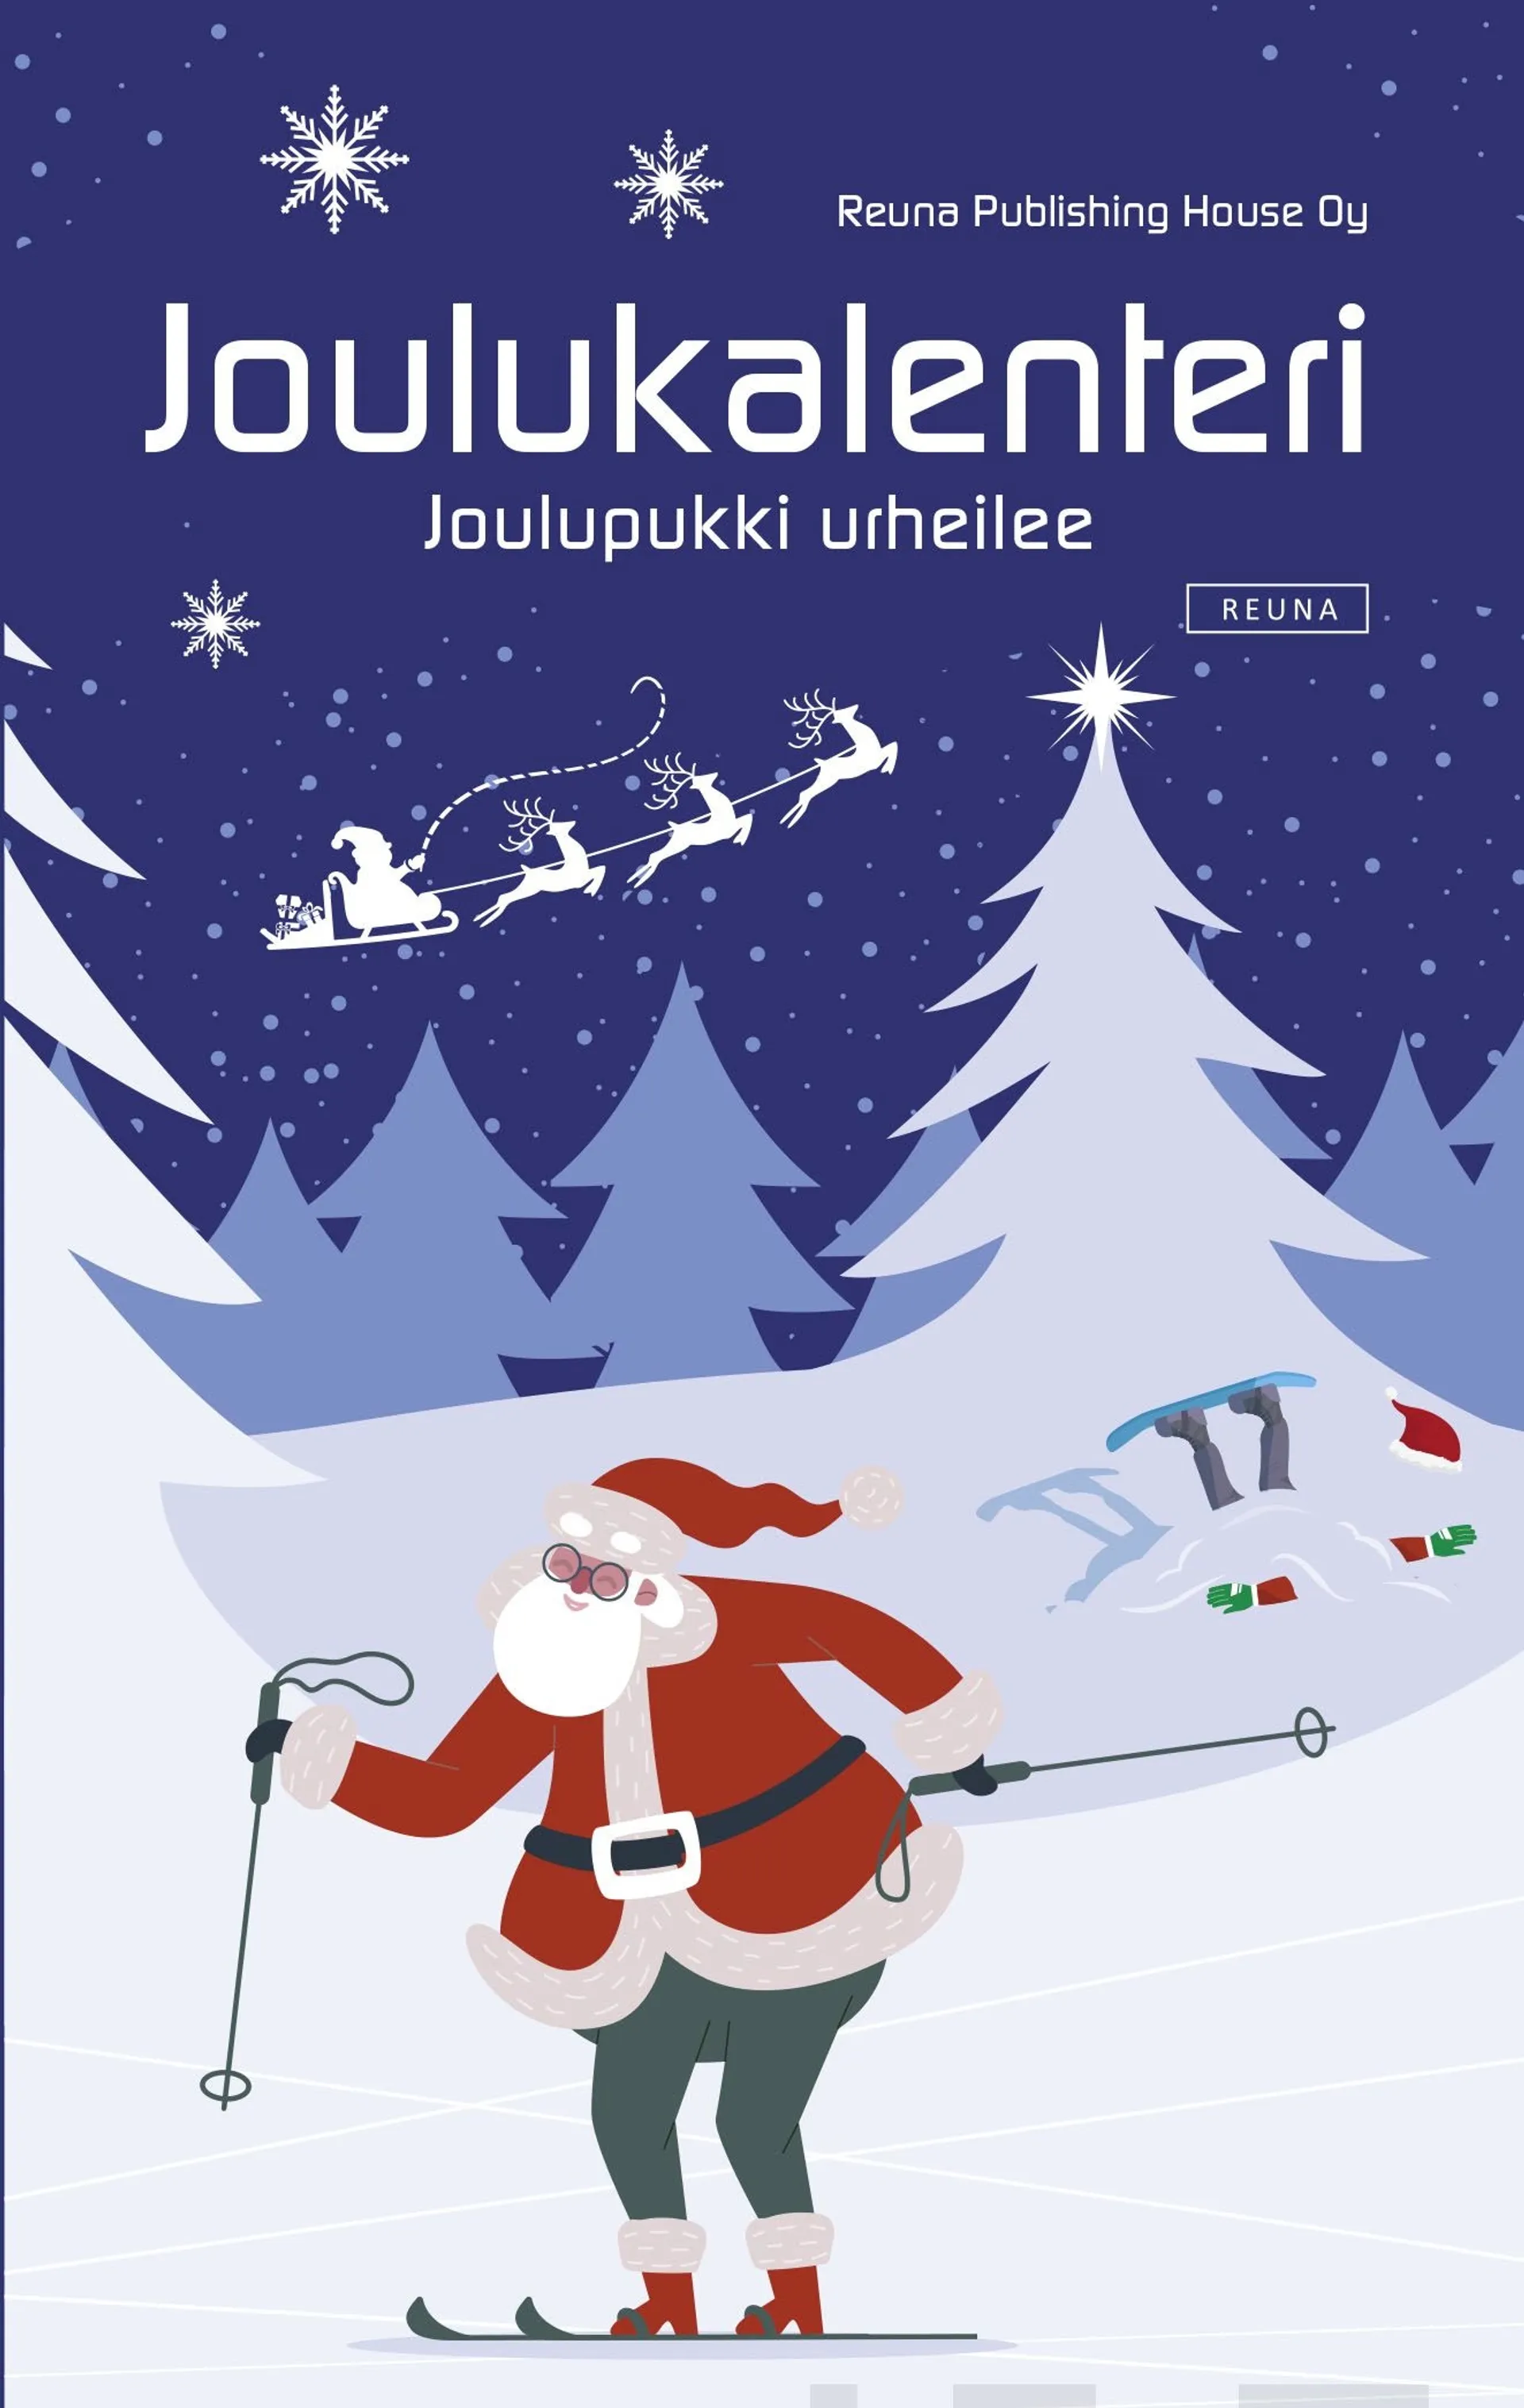 Reuna Publishing House, Joulukalenteri - Joulupukki urheilee